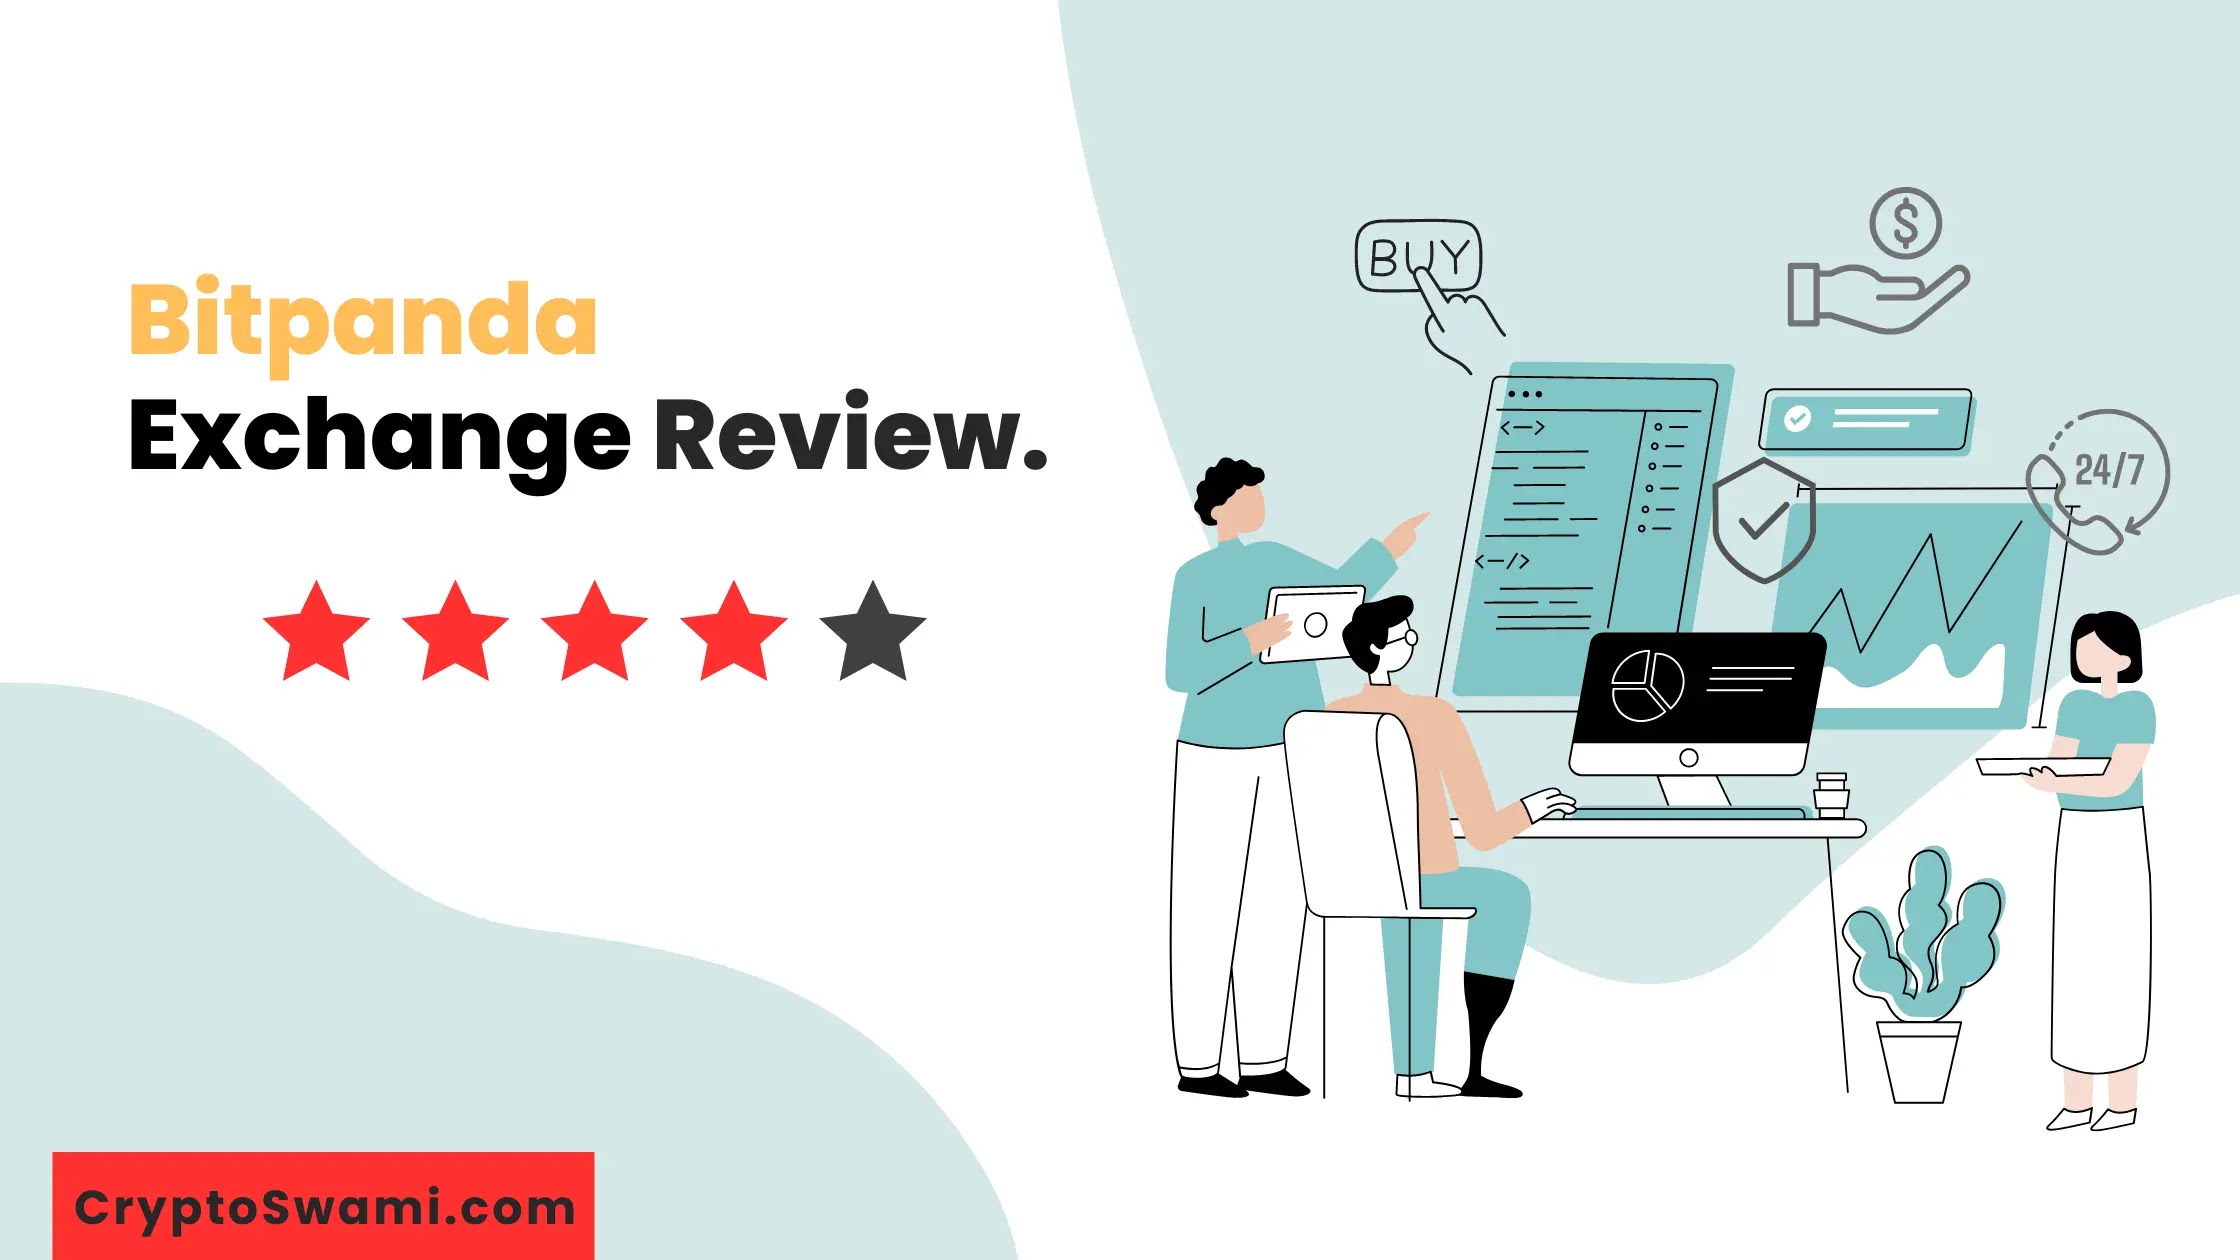 Bitpanda Review, exchange, cryptocurrency